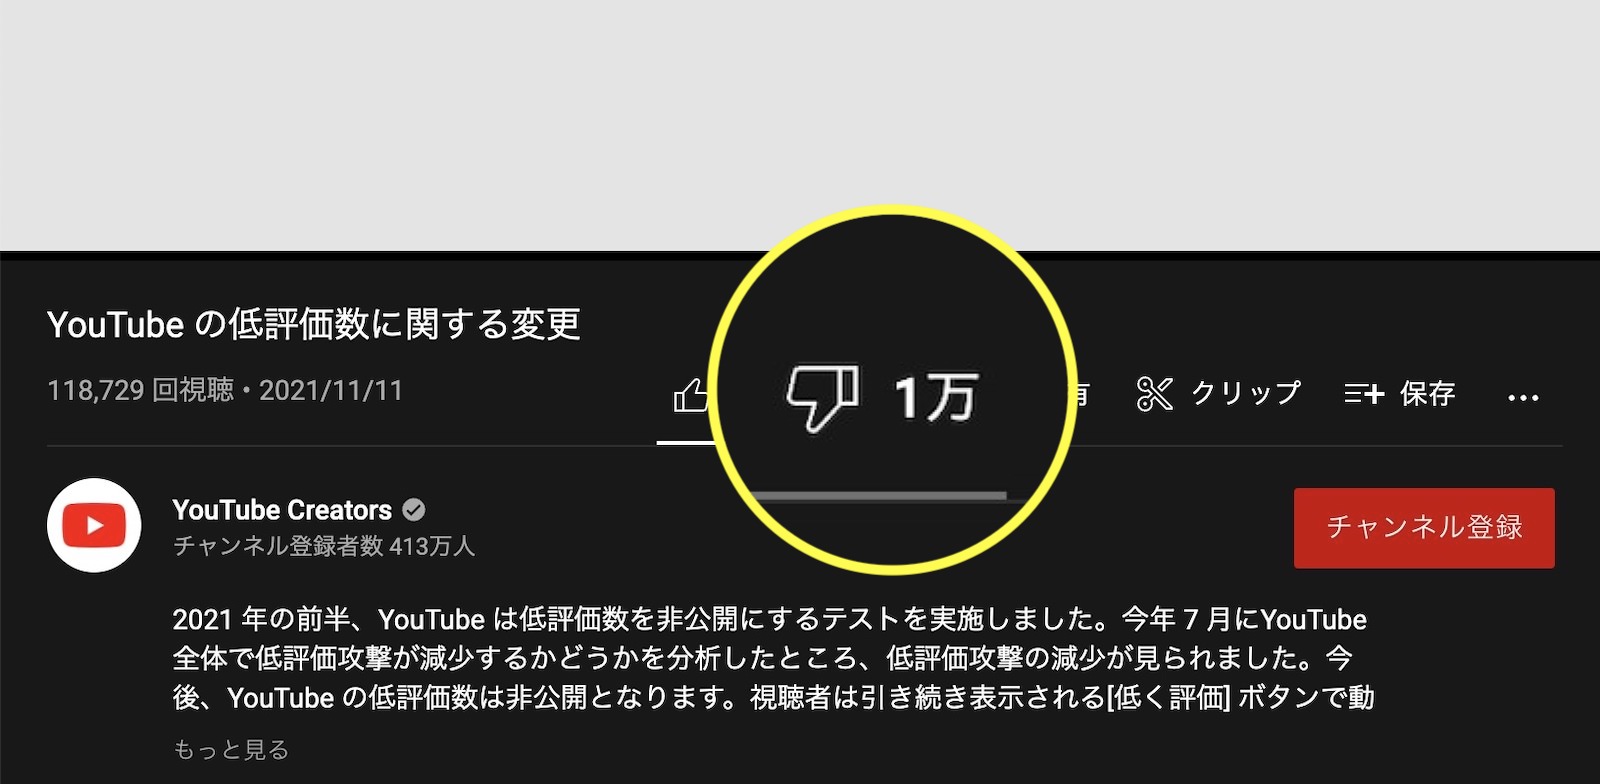 Dislike button on youtube